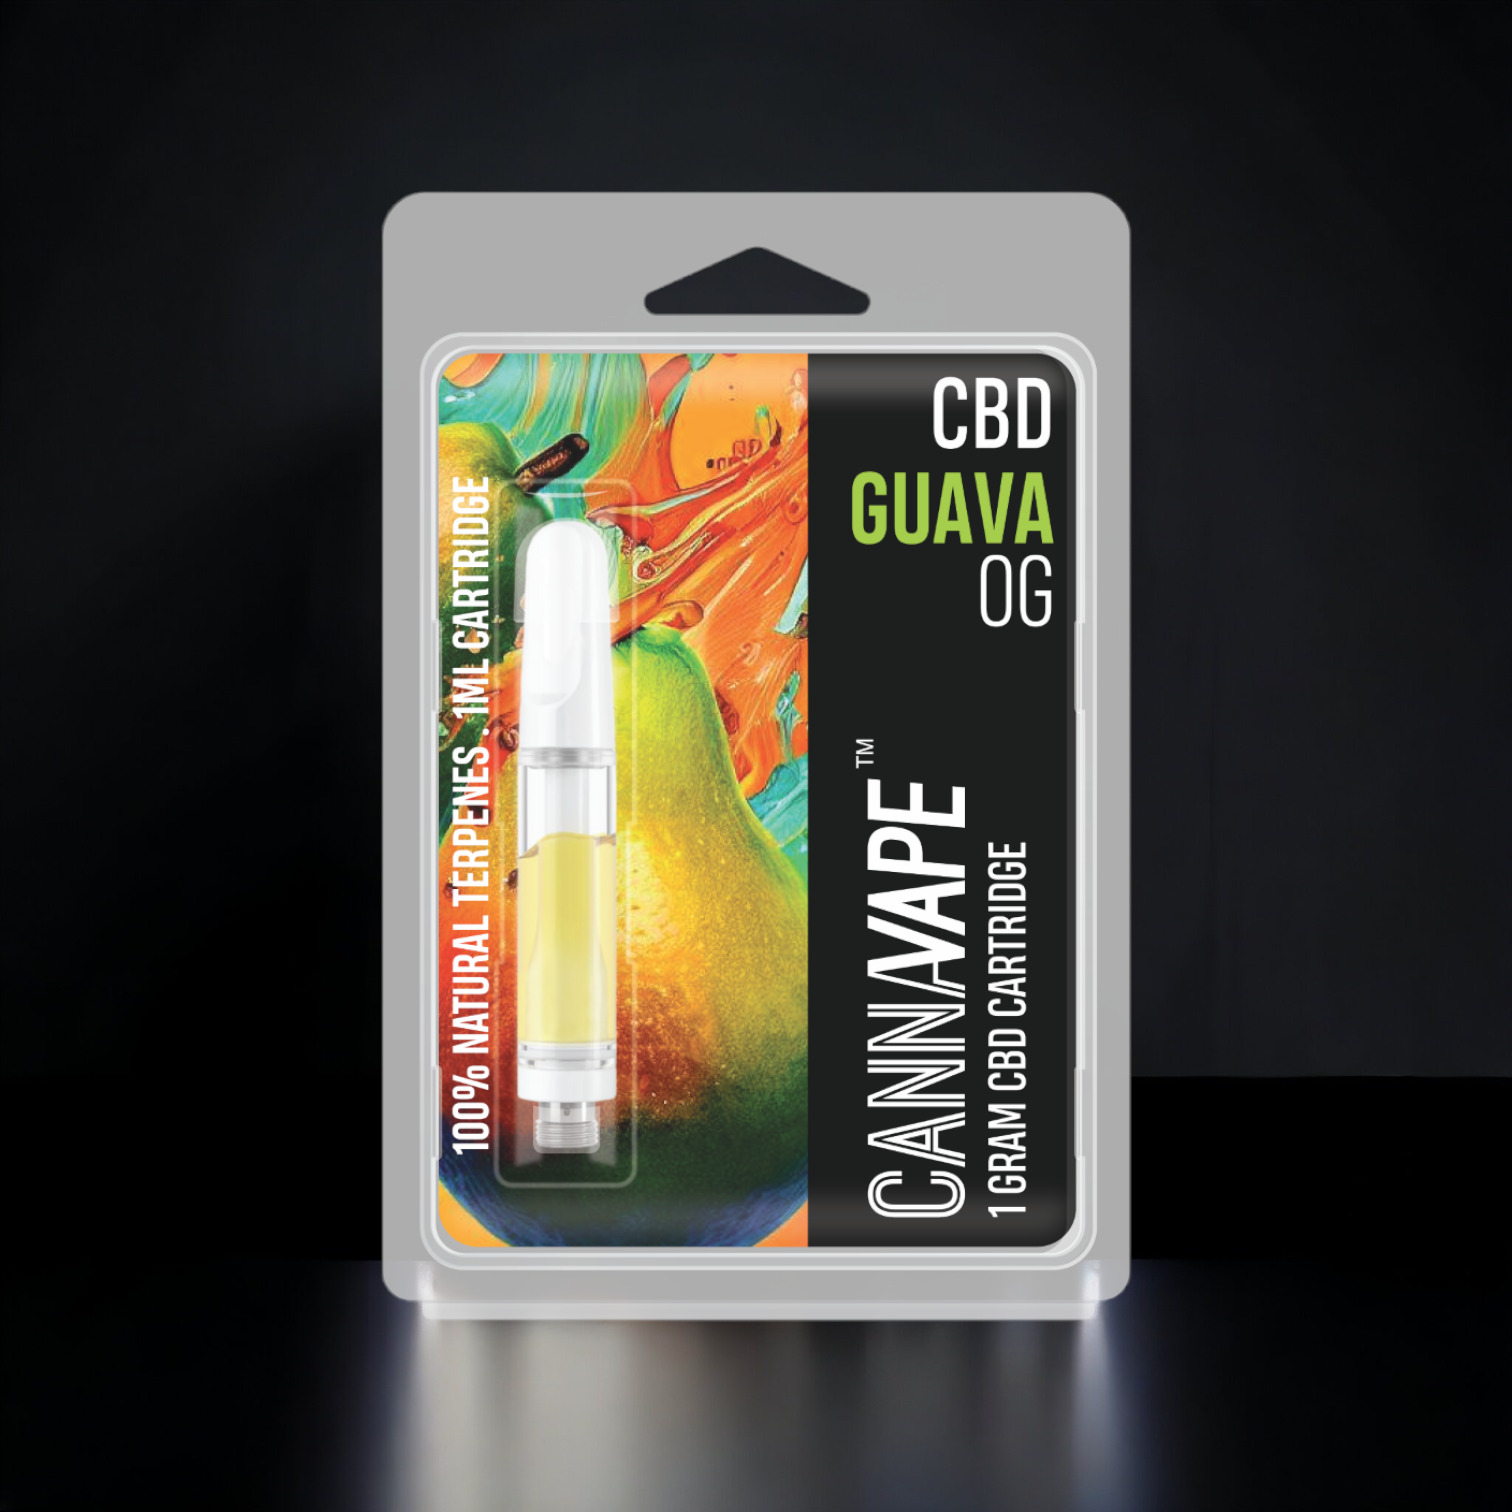 Guava OG CBD Cartridge